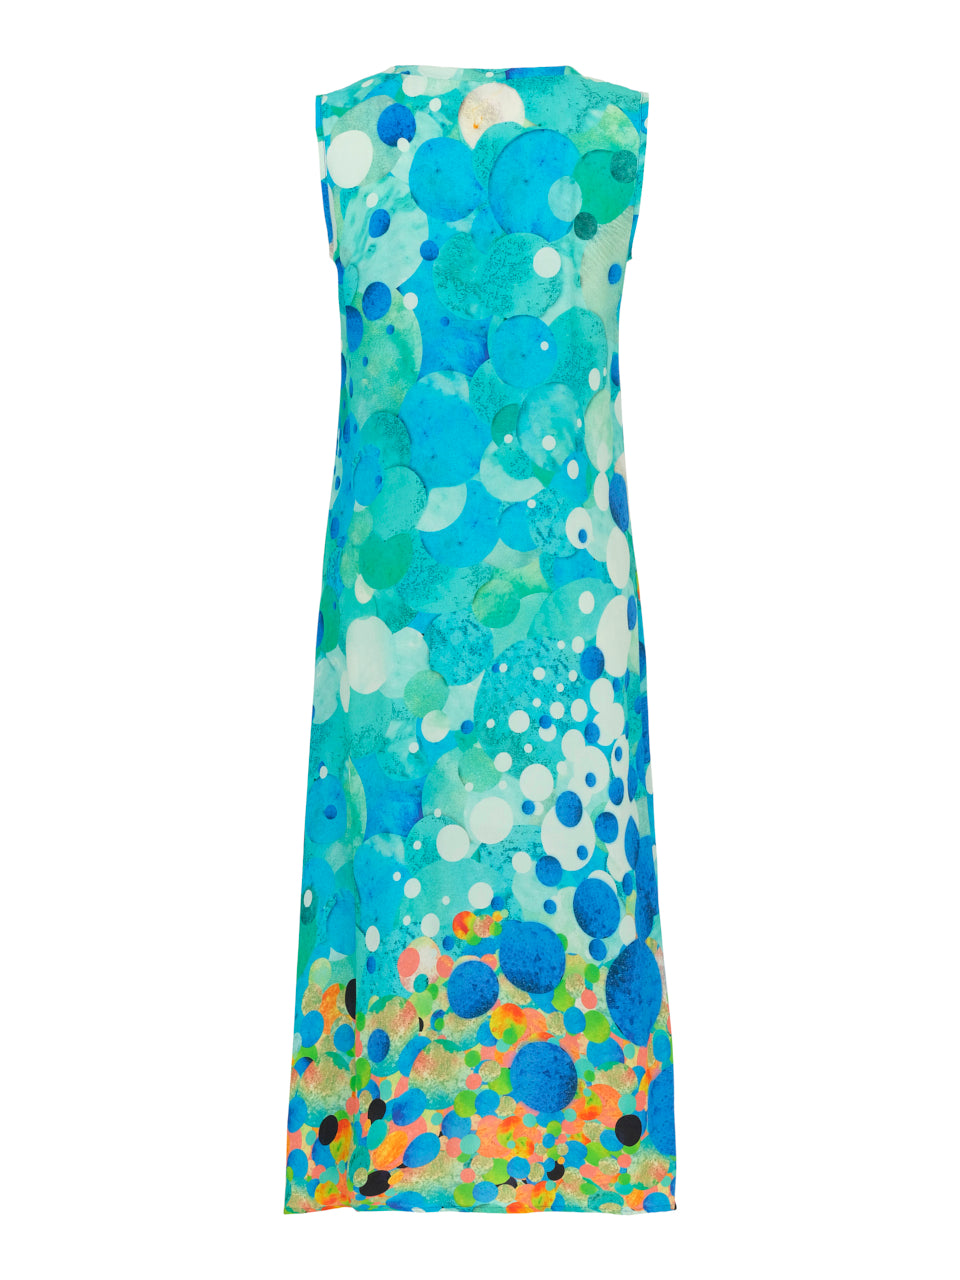 Big Angel Fish Mosaic Sleeveless Dress